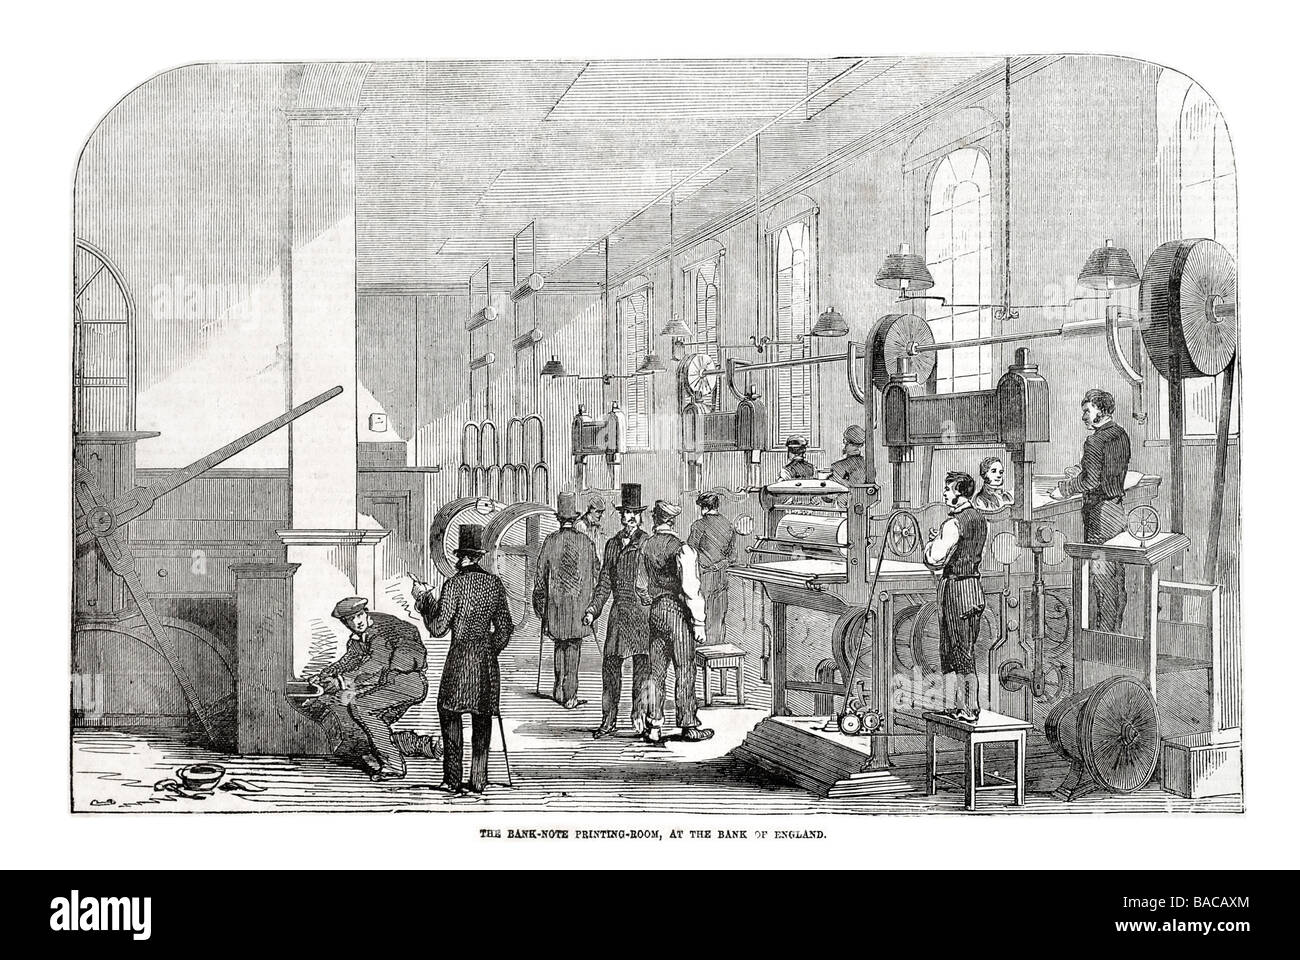 bank note printing room at the bank of england 1854 Stock Photo